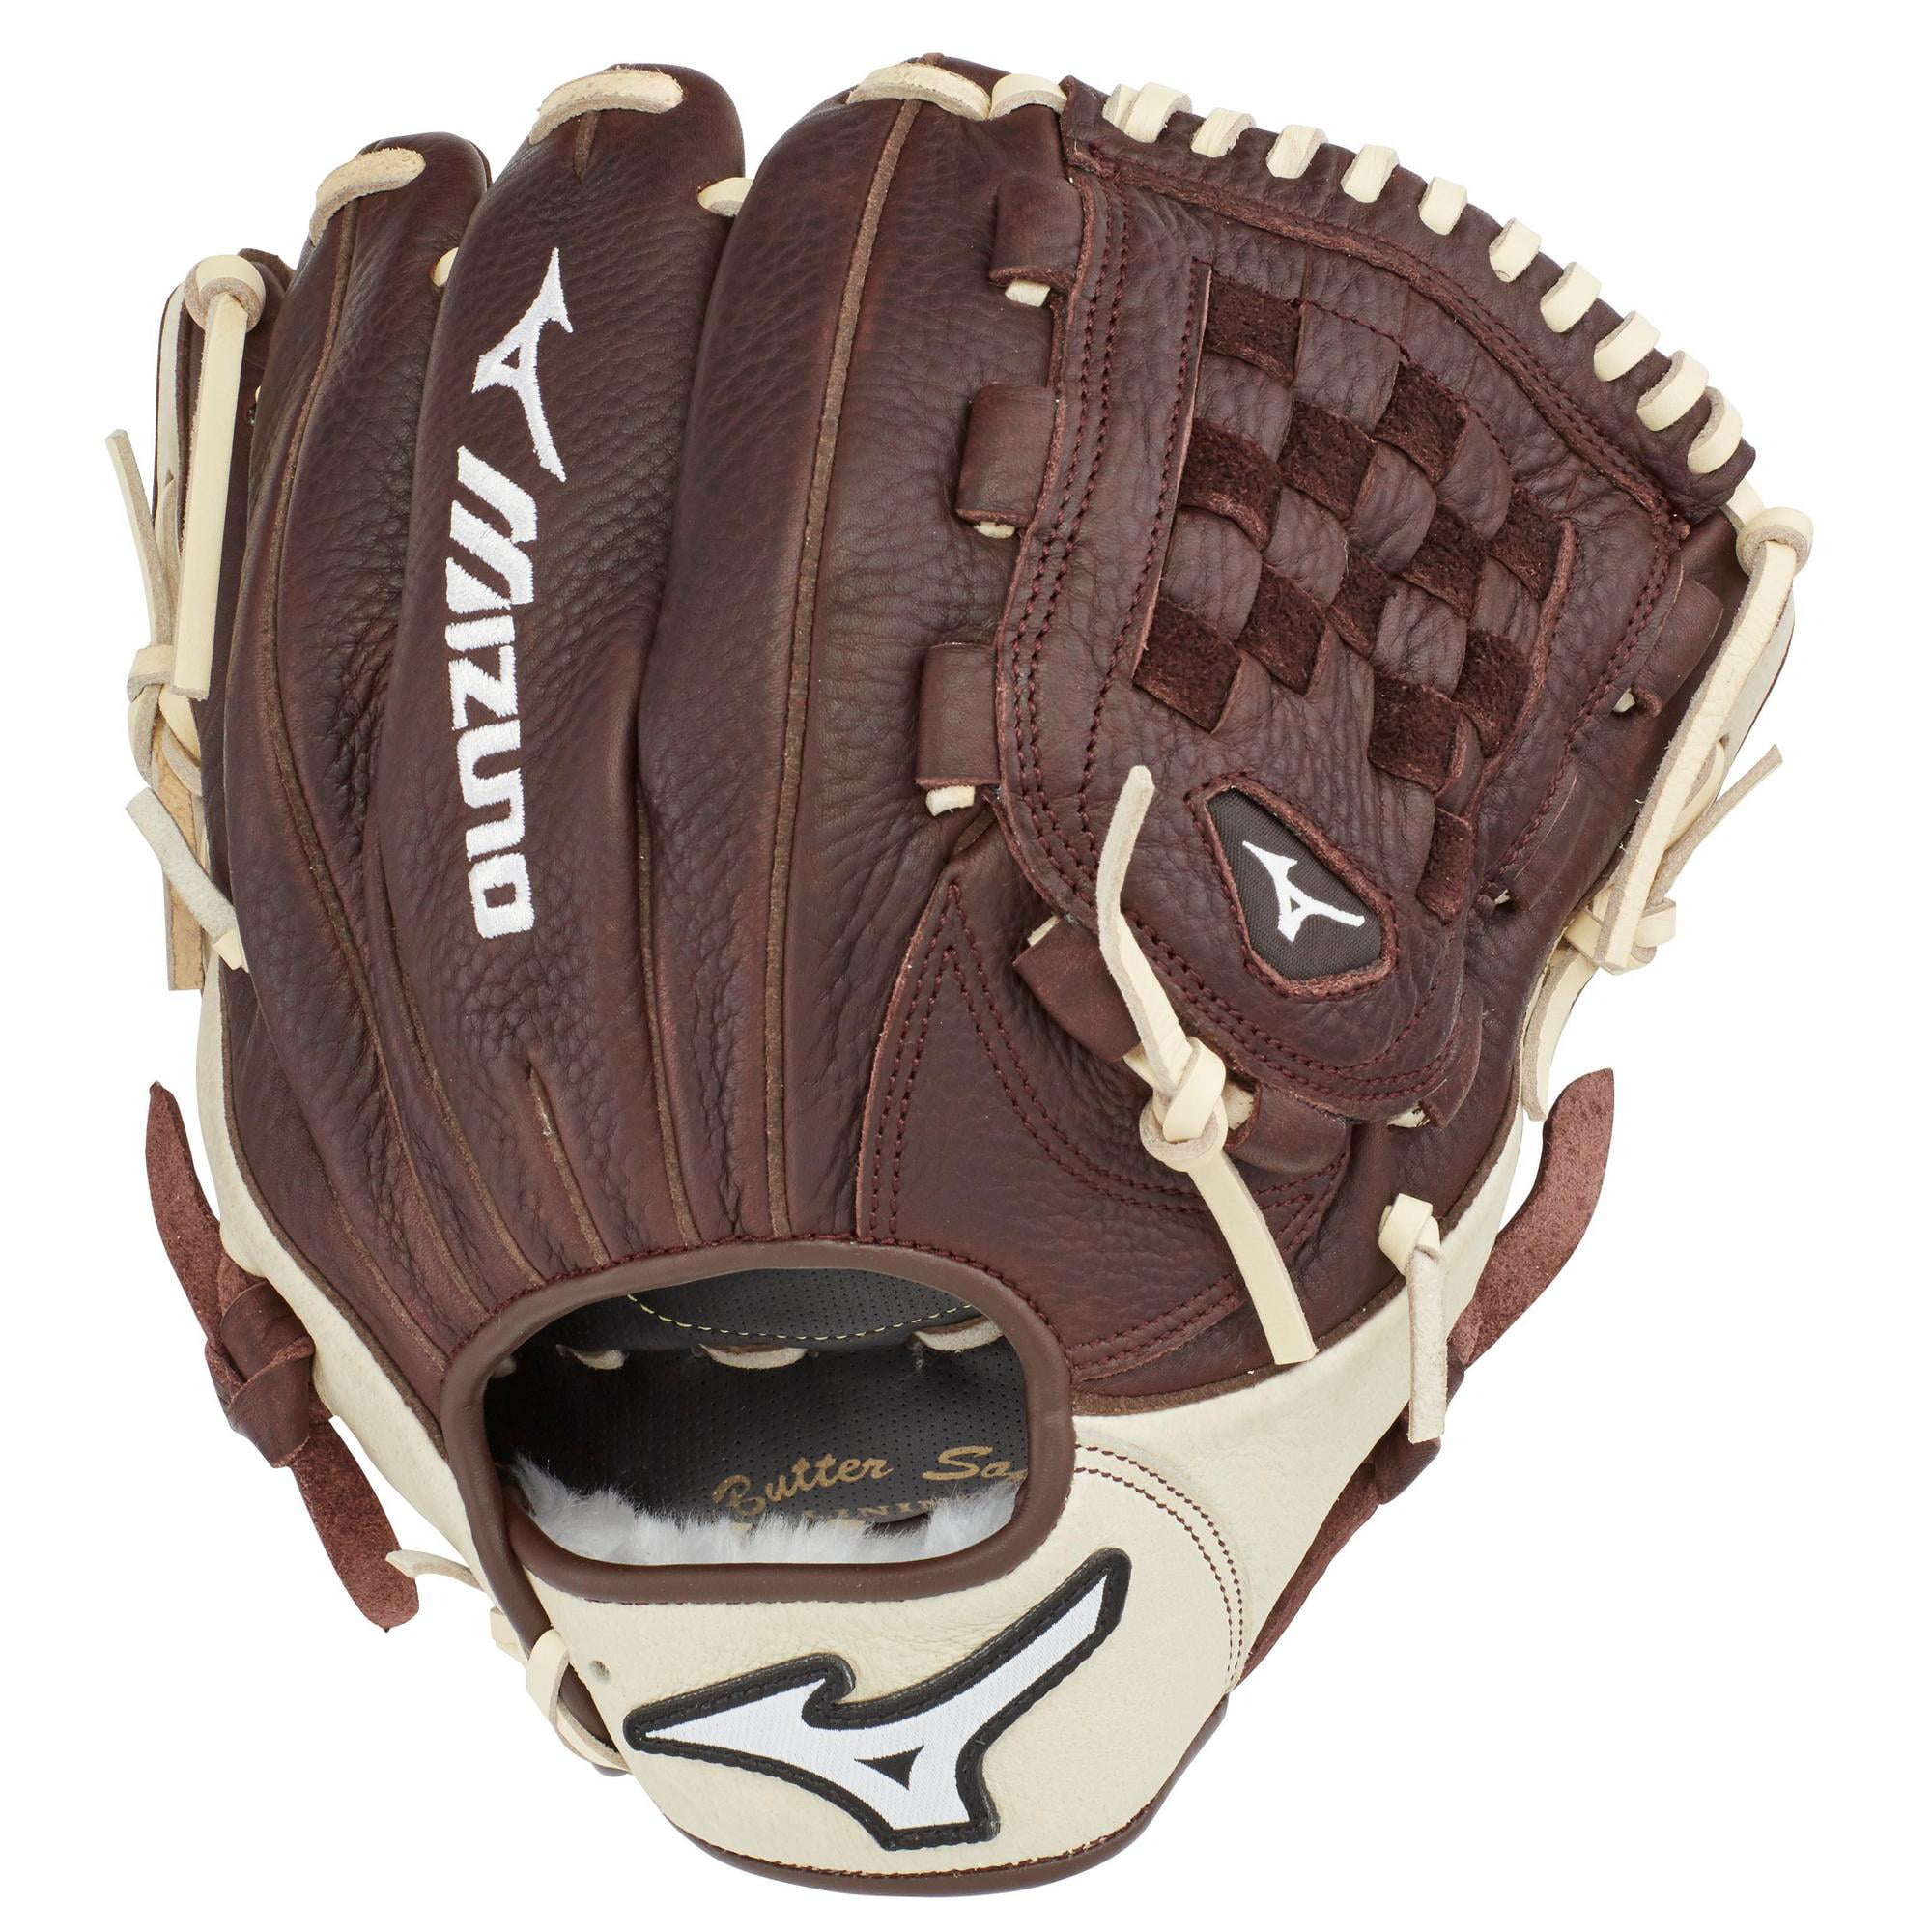 Mizuno Franchise Series Baseball Infield Glove Walmart.com